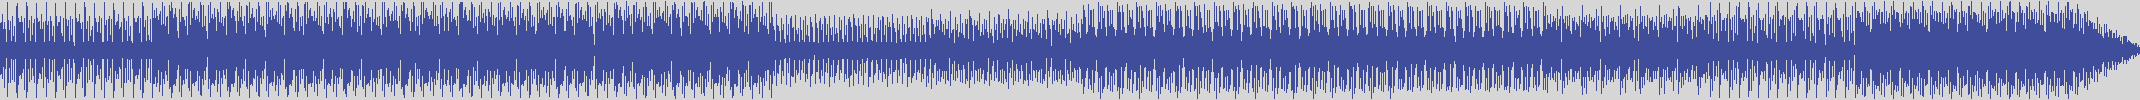 nf_boyz_records [NFY015] Nj Smart - Deja Vu [Original Mix] audio wave form